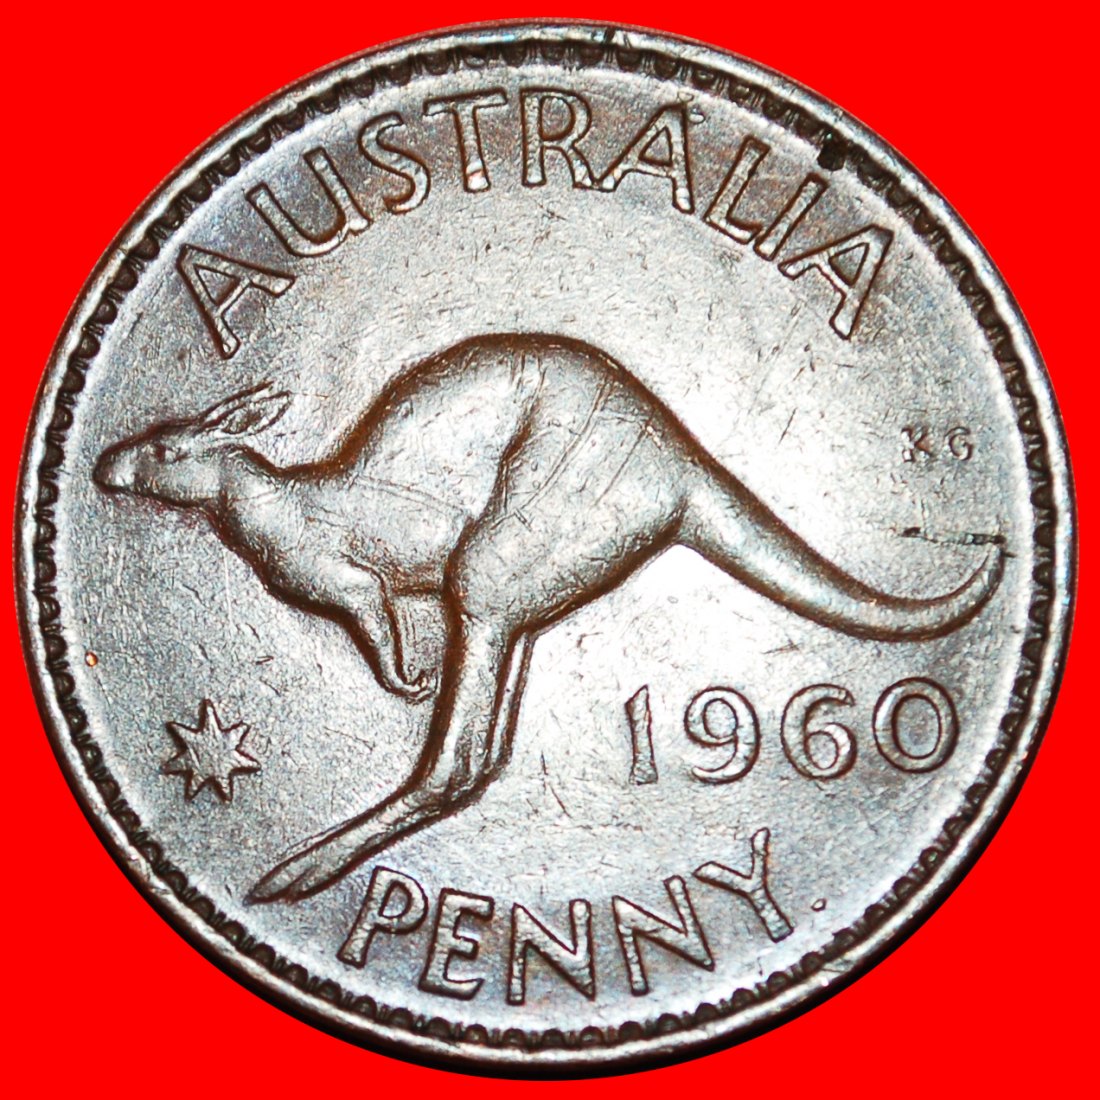  * PERTH (1955-1964): AUSTRALIEN 1 PENNY 1960! KÄNGURU LINKS!  OHNE VORBEHALT!   